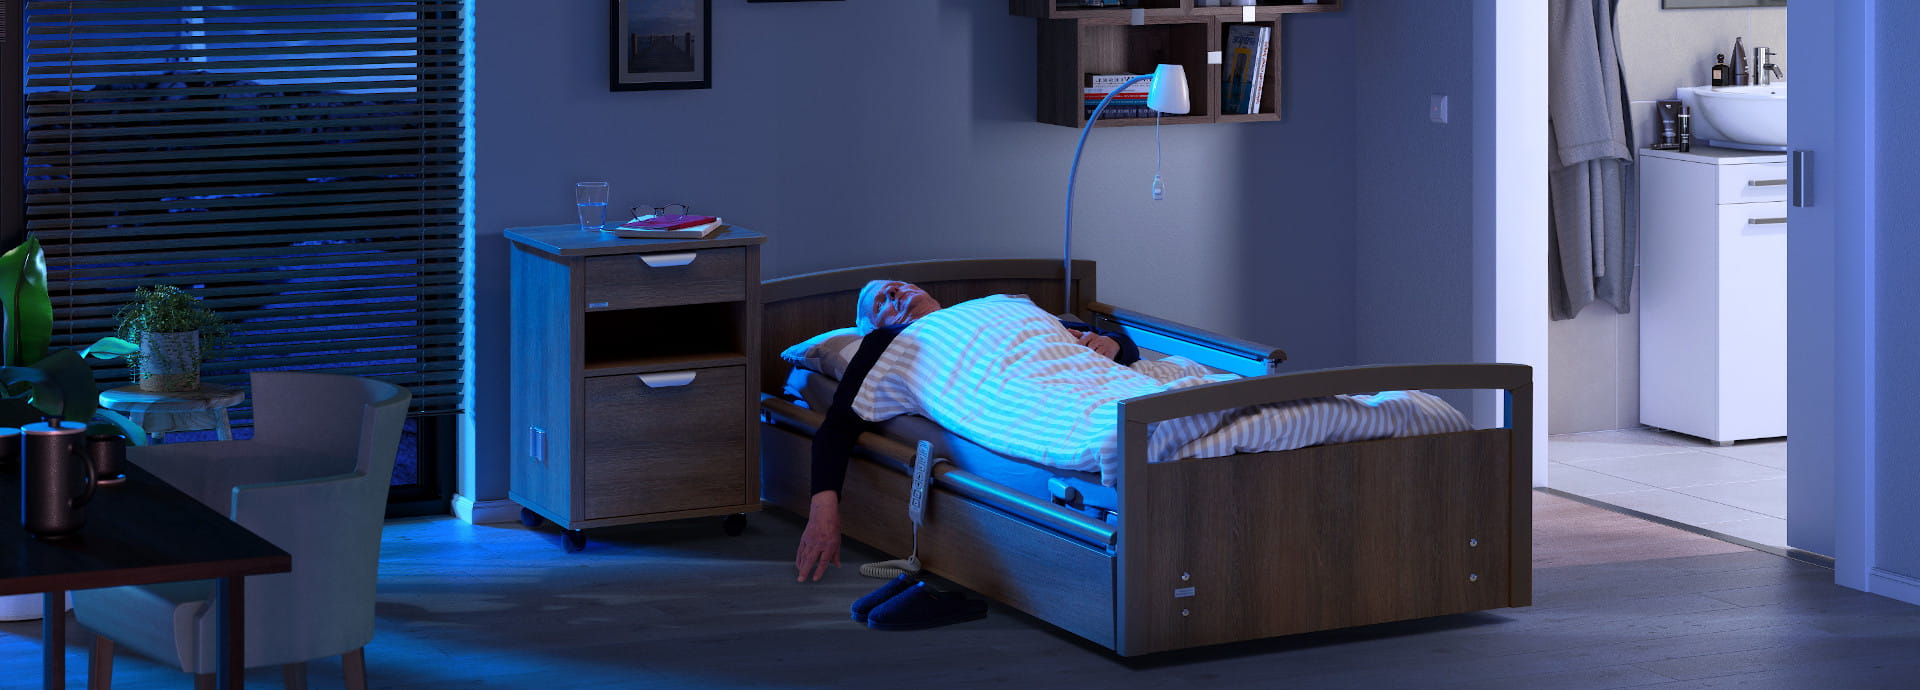 The sentida sc premium nursing home beds from wissner-bosserhoff